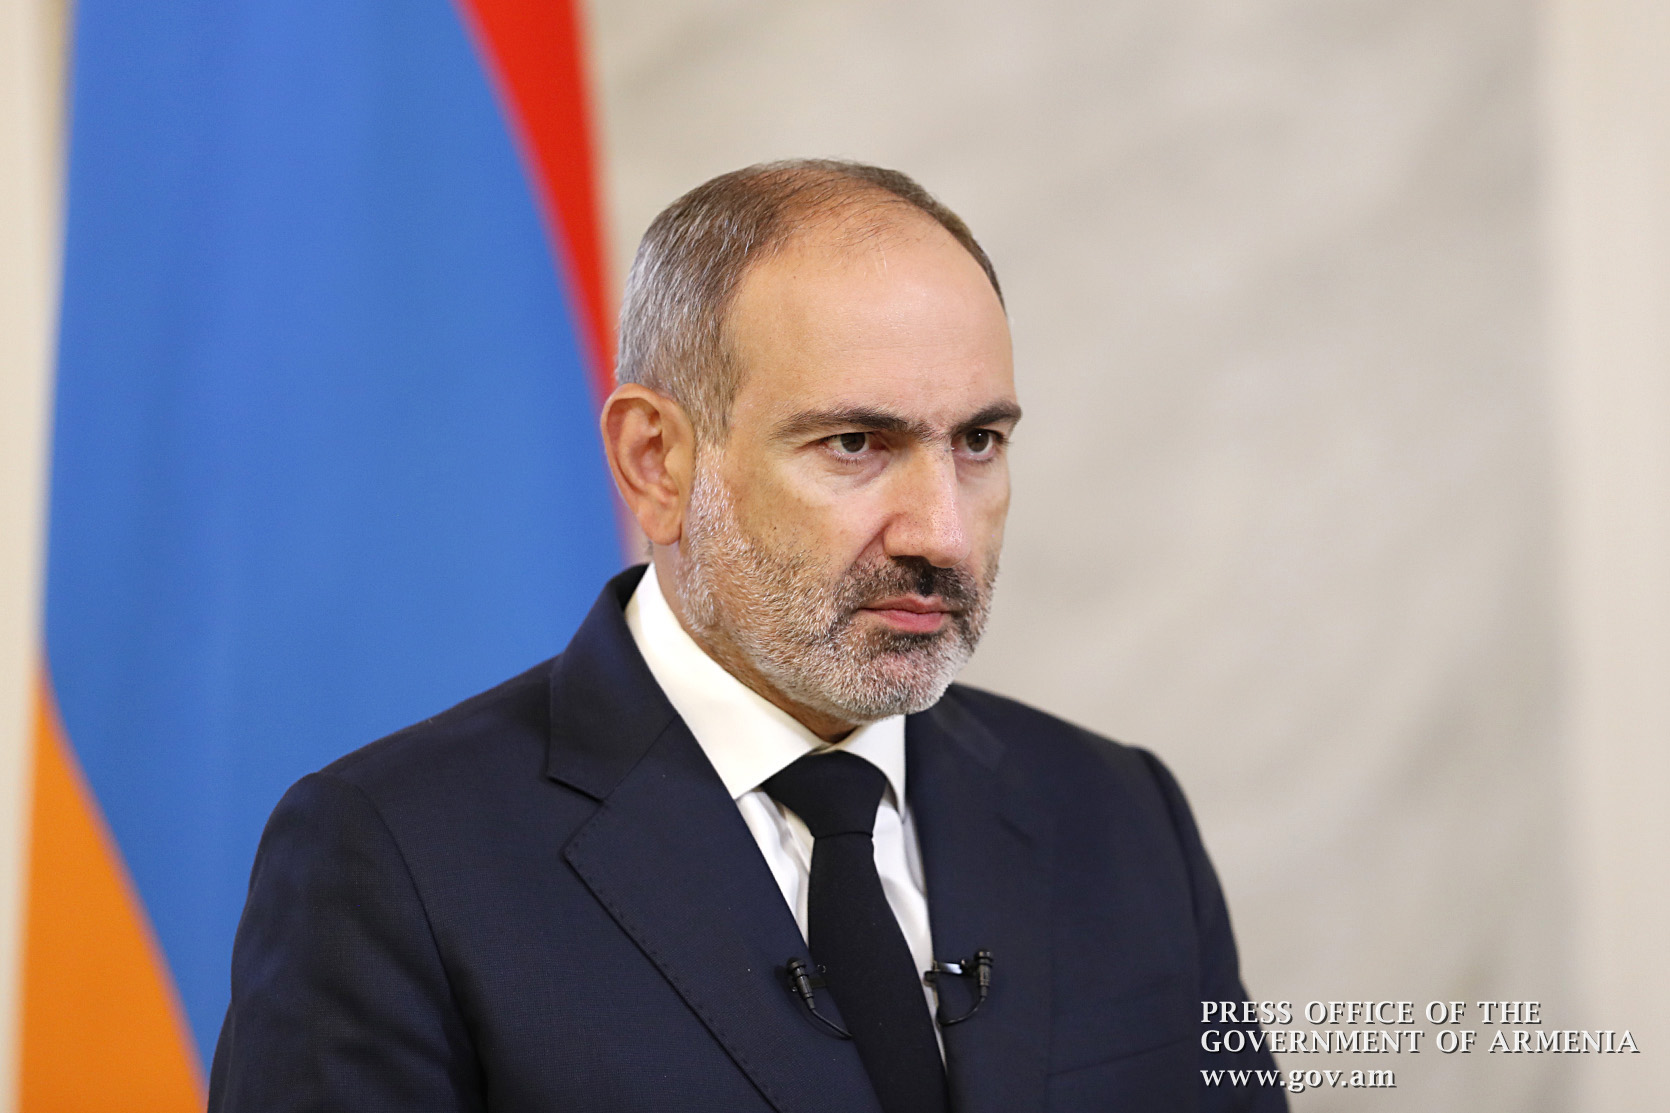 Armenia 'painfully' agrees to end war with Azerbaijan, PM Pashinian says